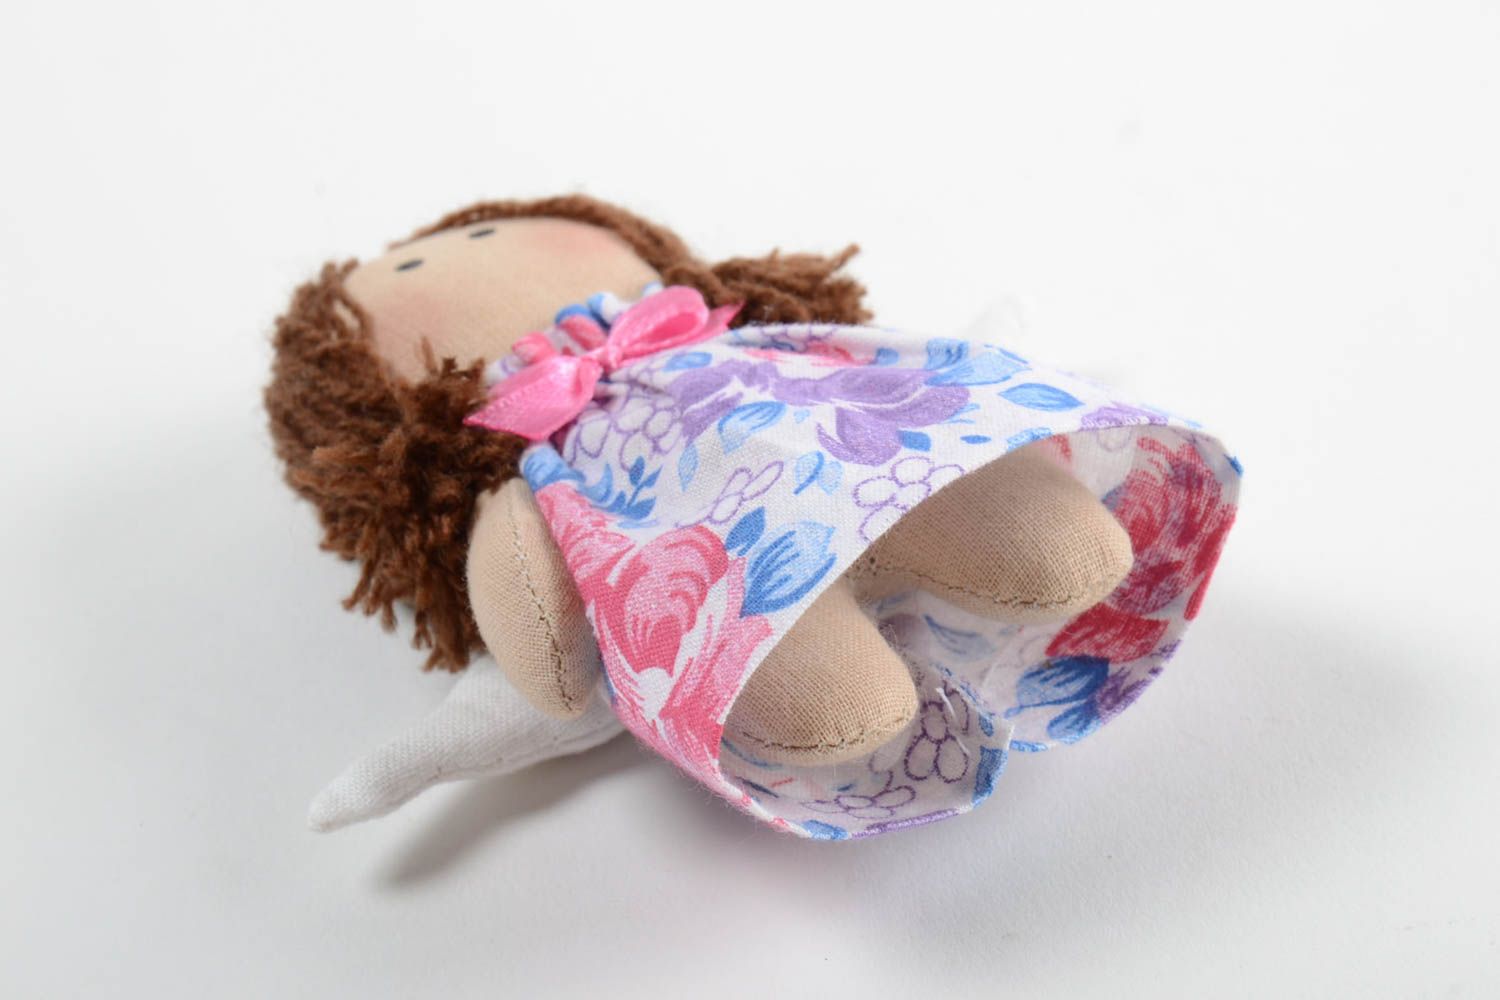 Small homemade fabric interior doll soft rag doll decorative toys gift ideas photo 5